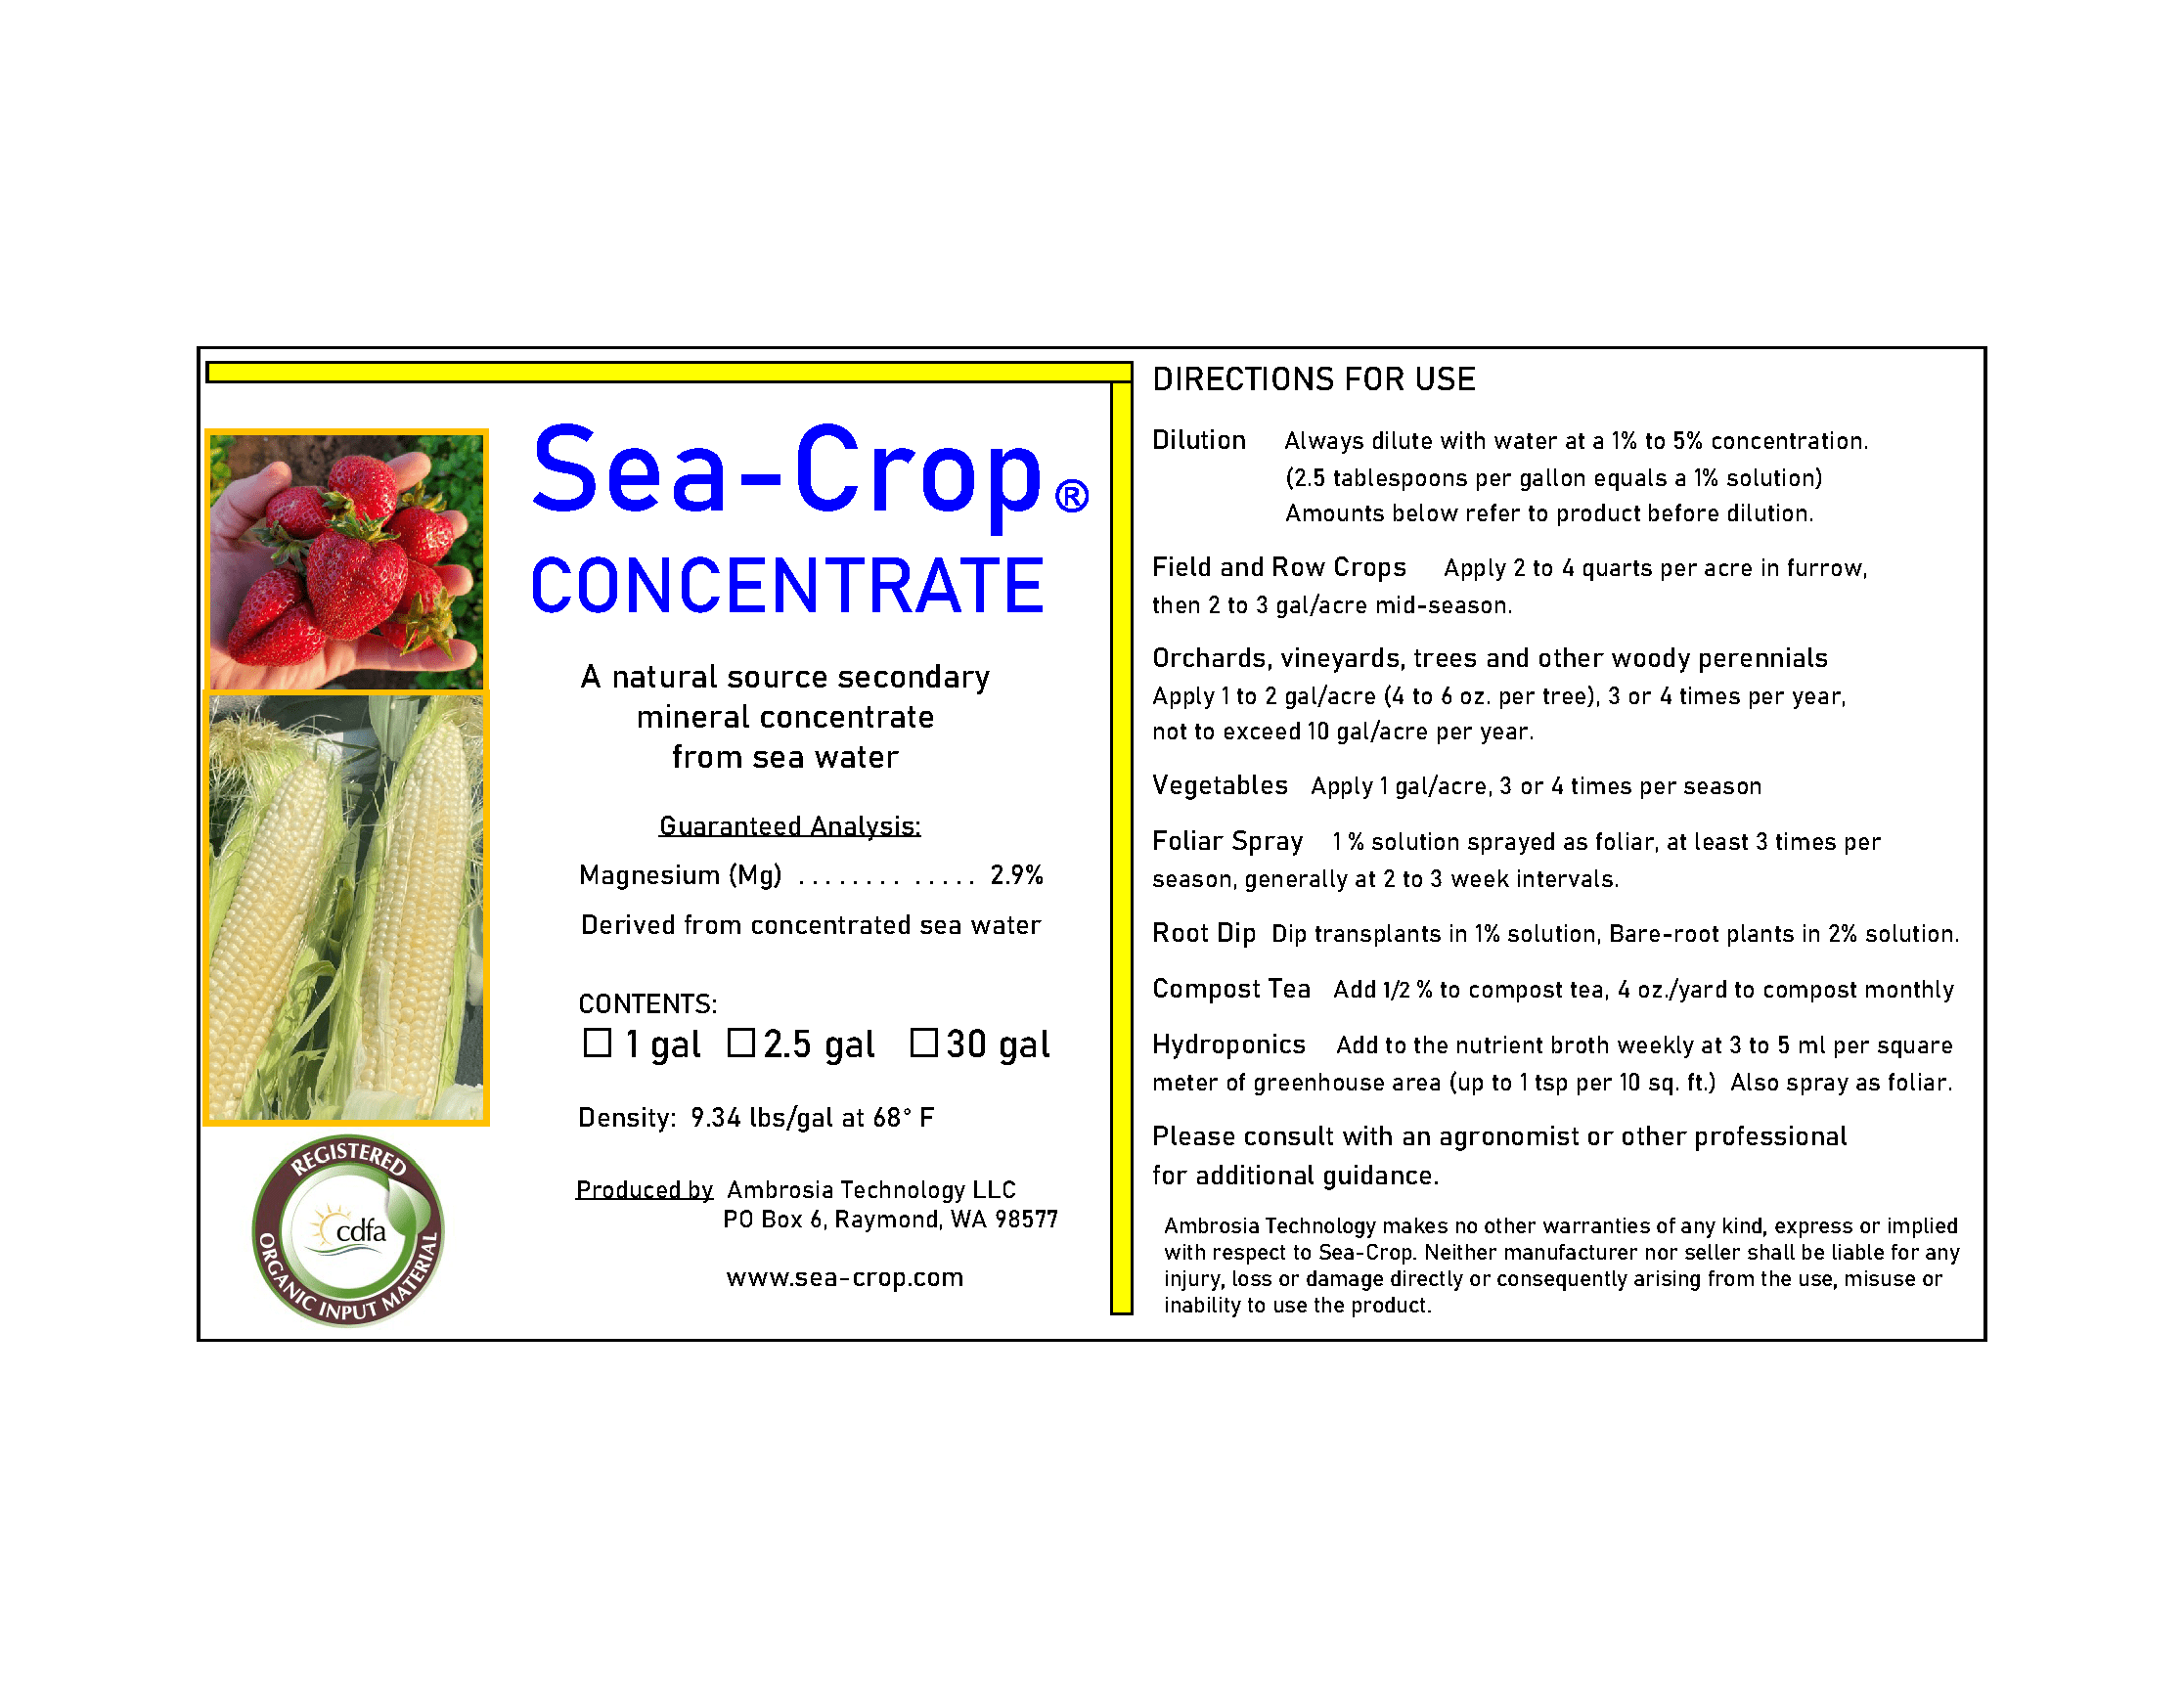 Apical Crop Science 2.5 gal Sea-Crop Ocean Mineral Concentrate